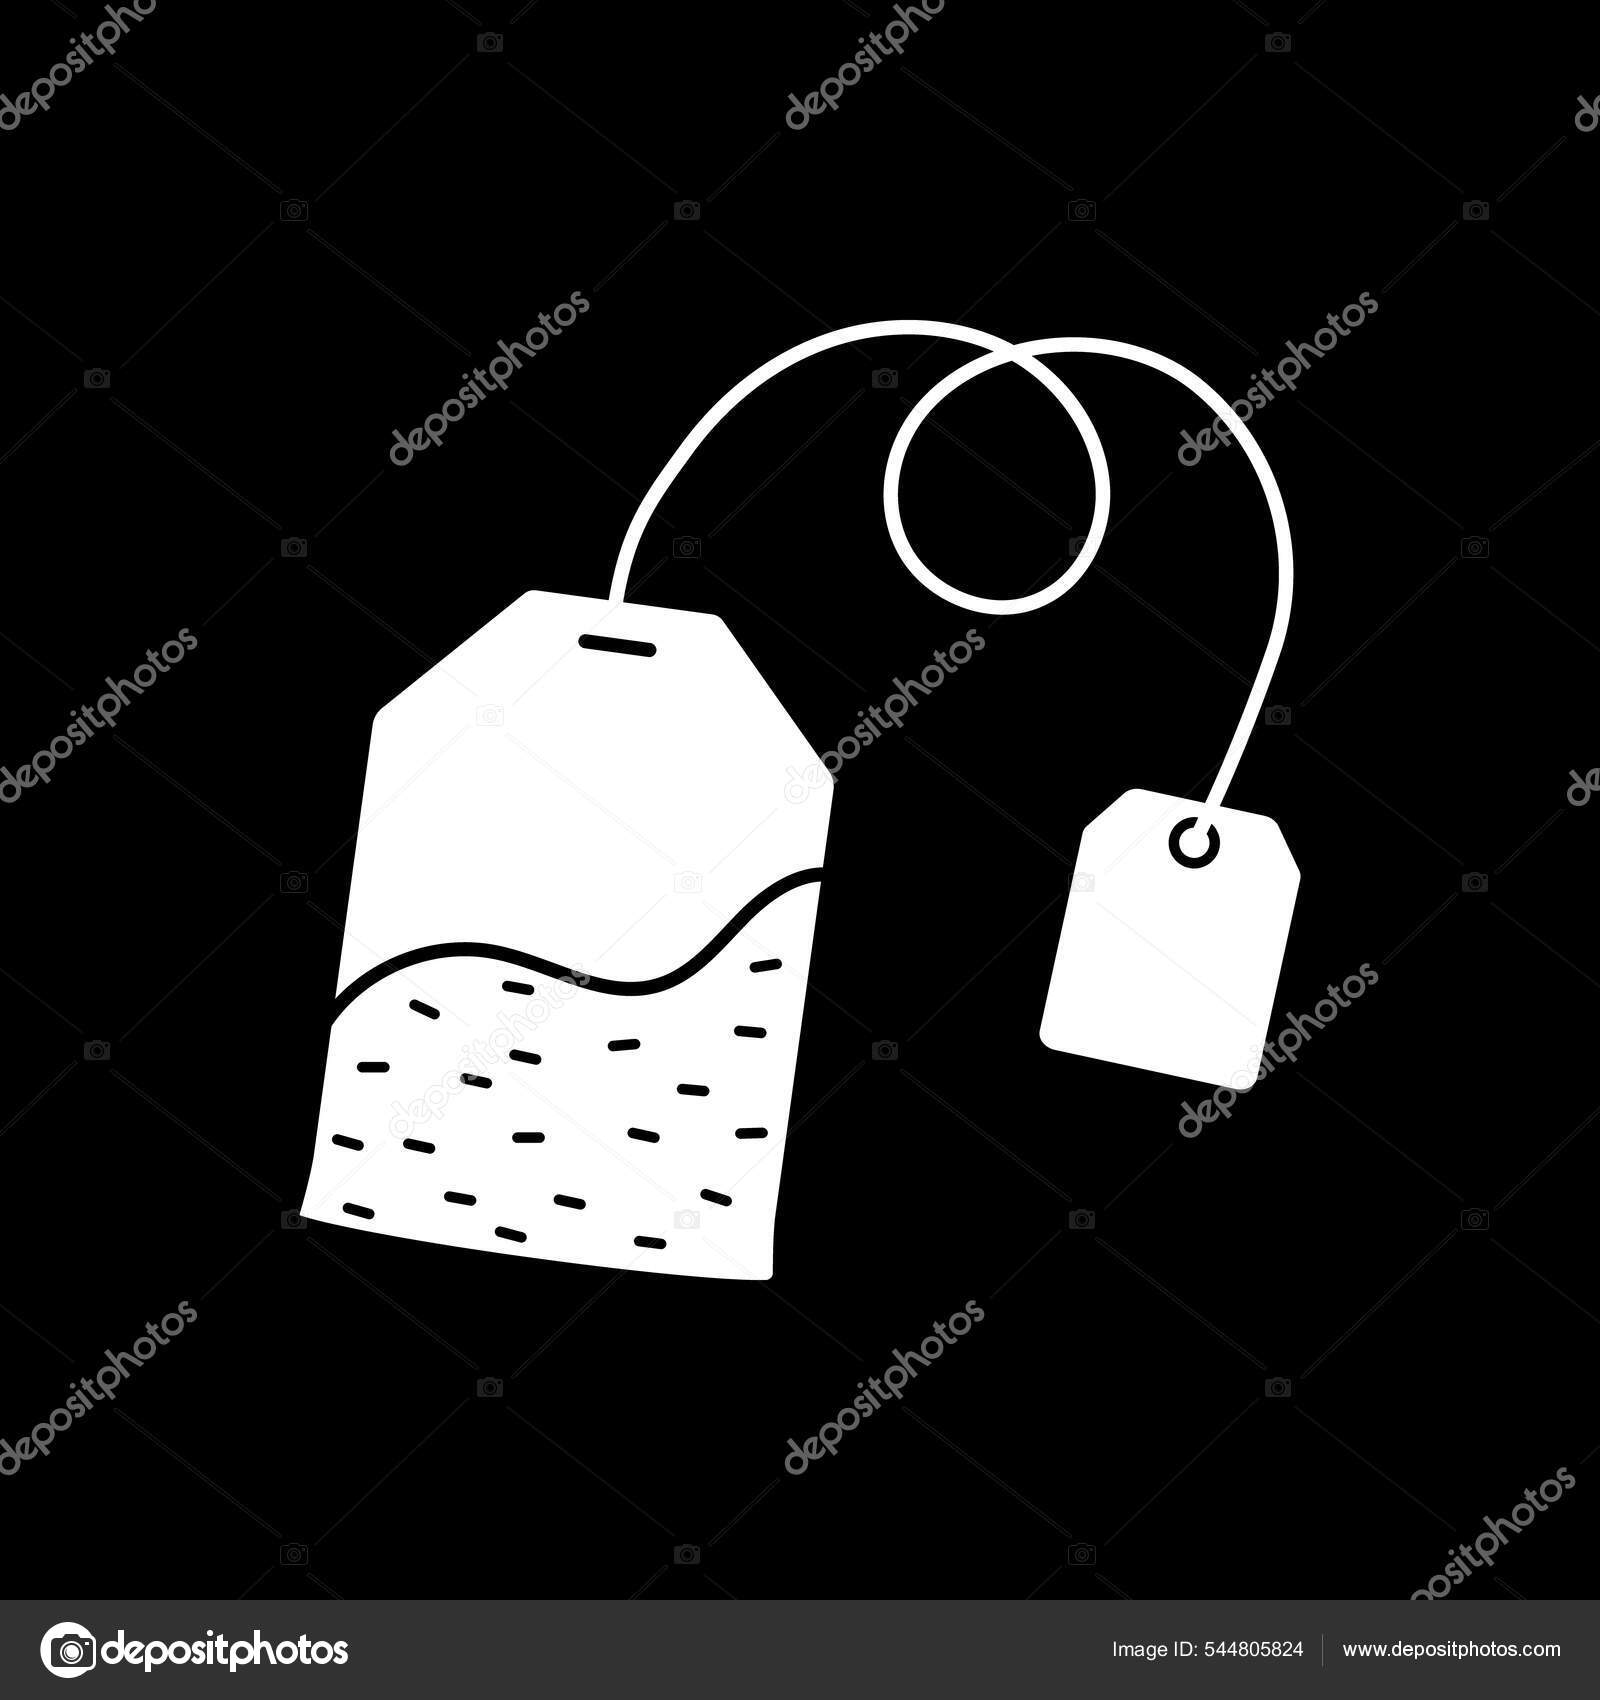 https://st.depositphotos.com/4177785/54480/v/1600/depositphotos_544805824-stock-illustration-tea-bag-dark-mode-glyph.jpg